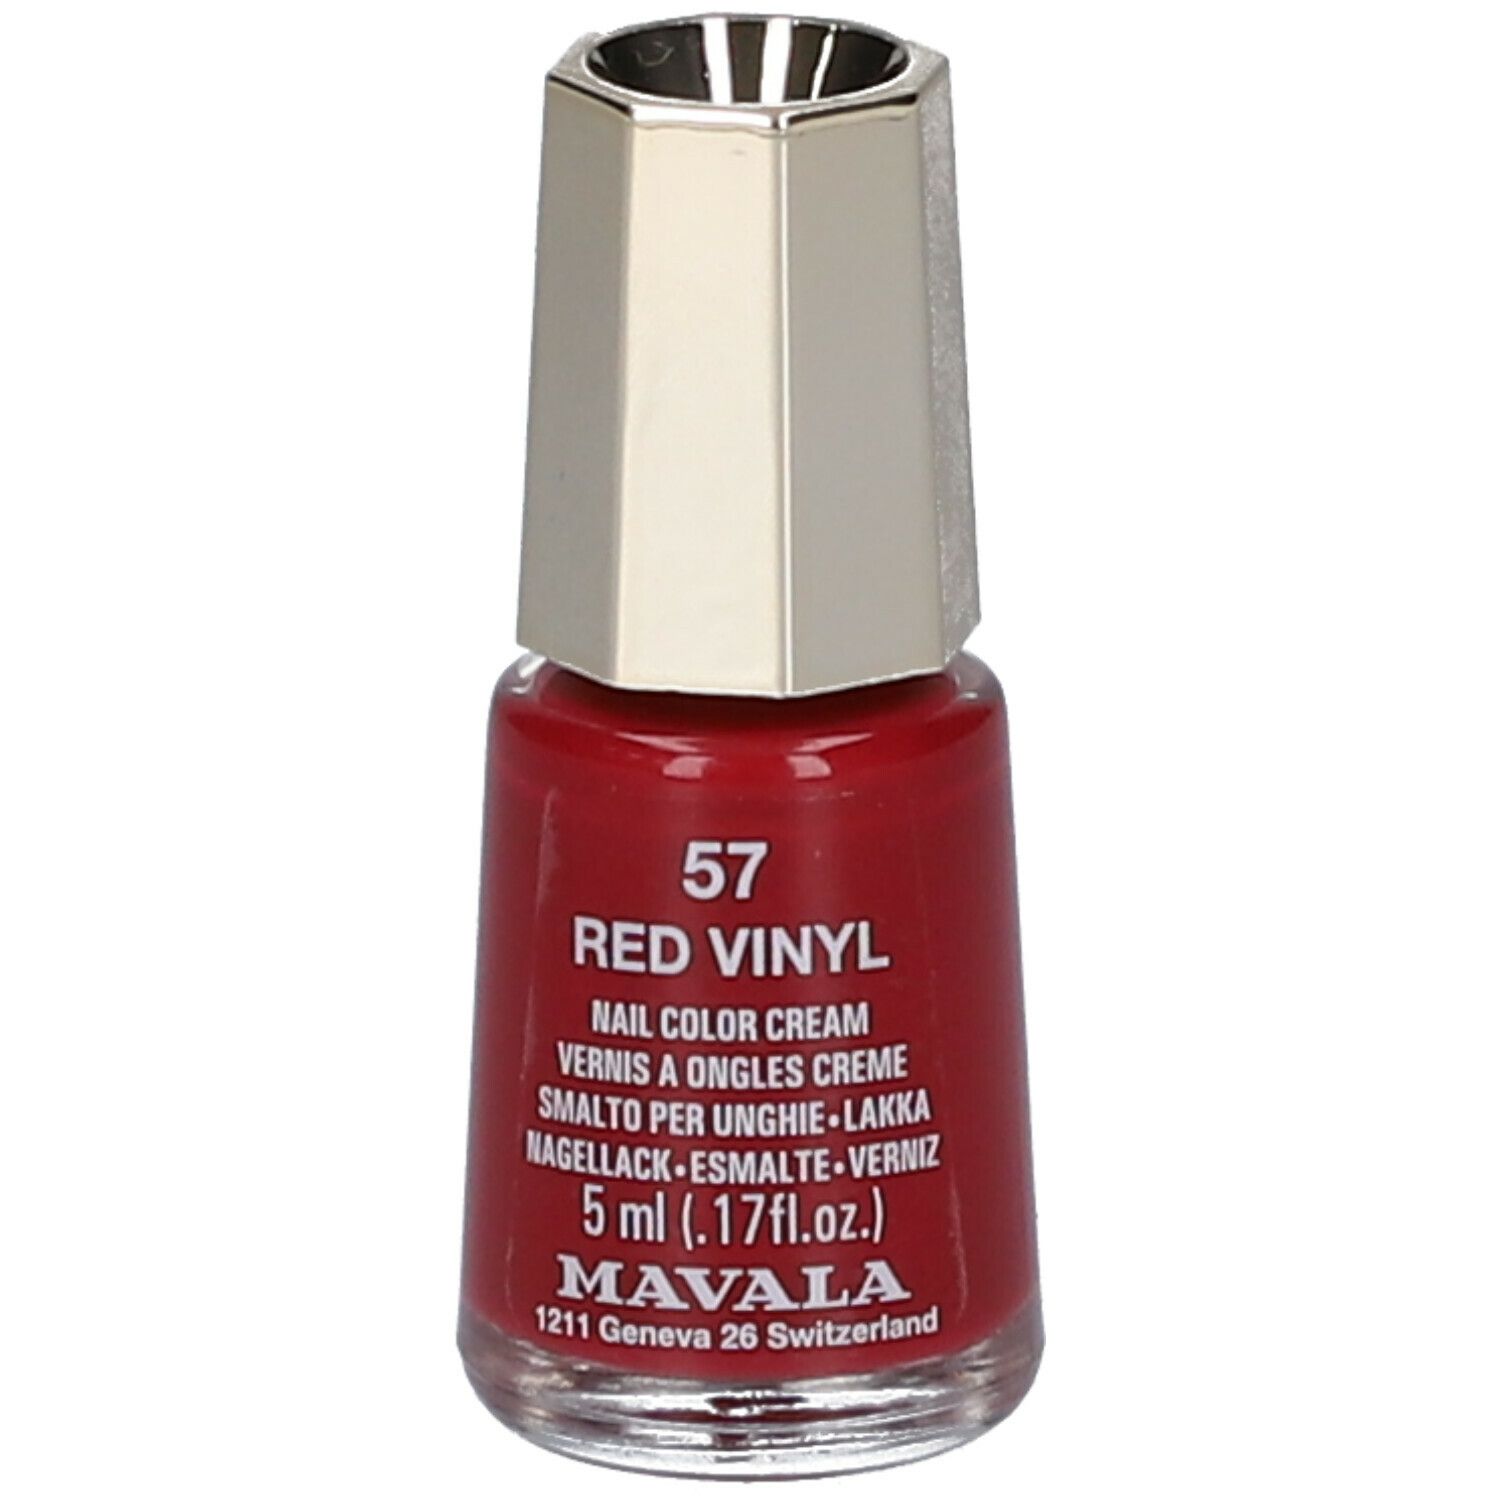 Mavala Mini Color vernis à ongles crème - Red Vinyl 057